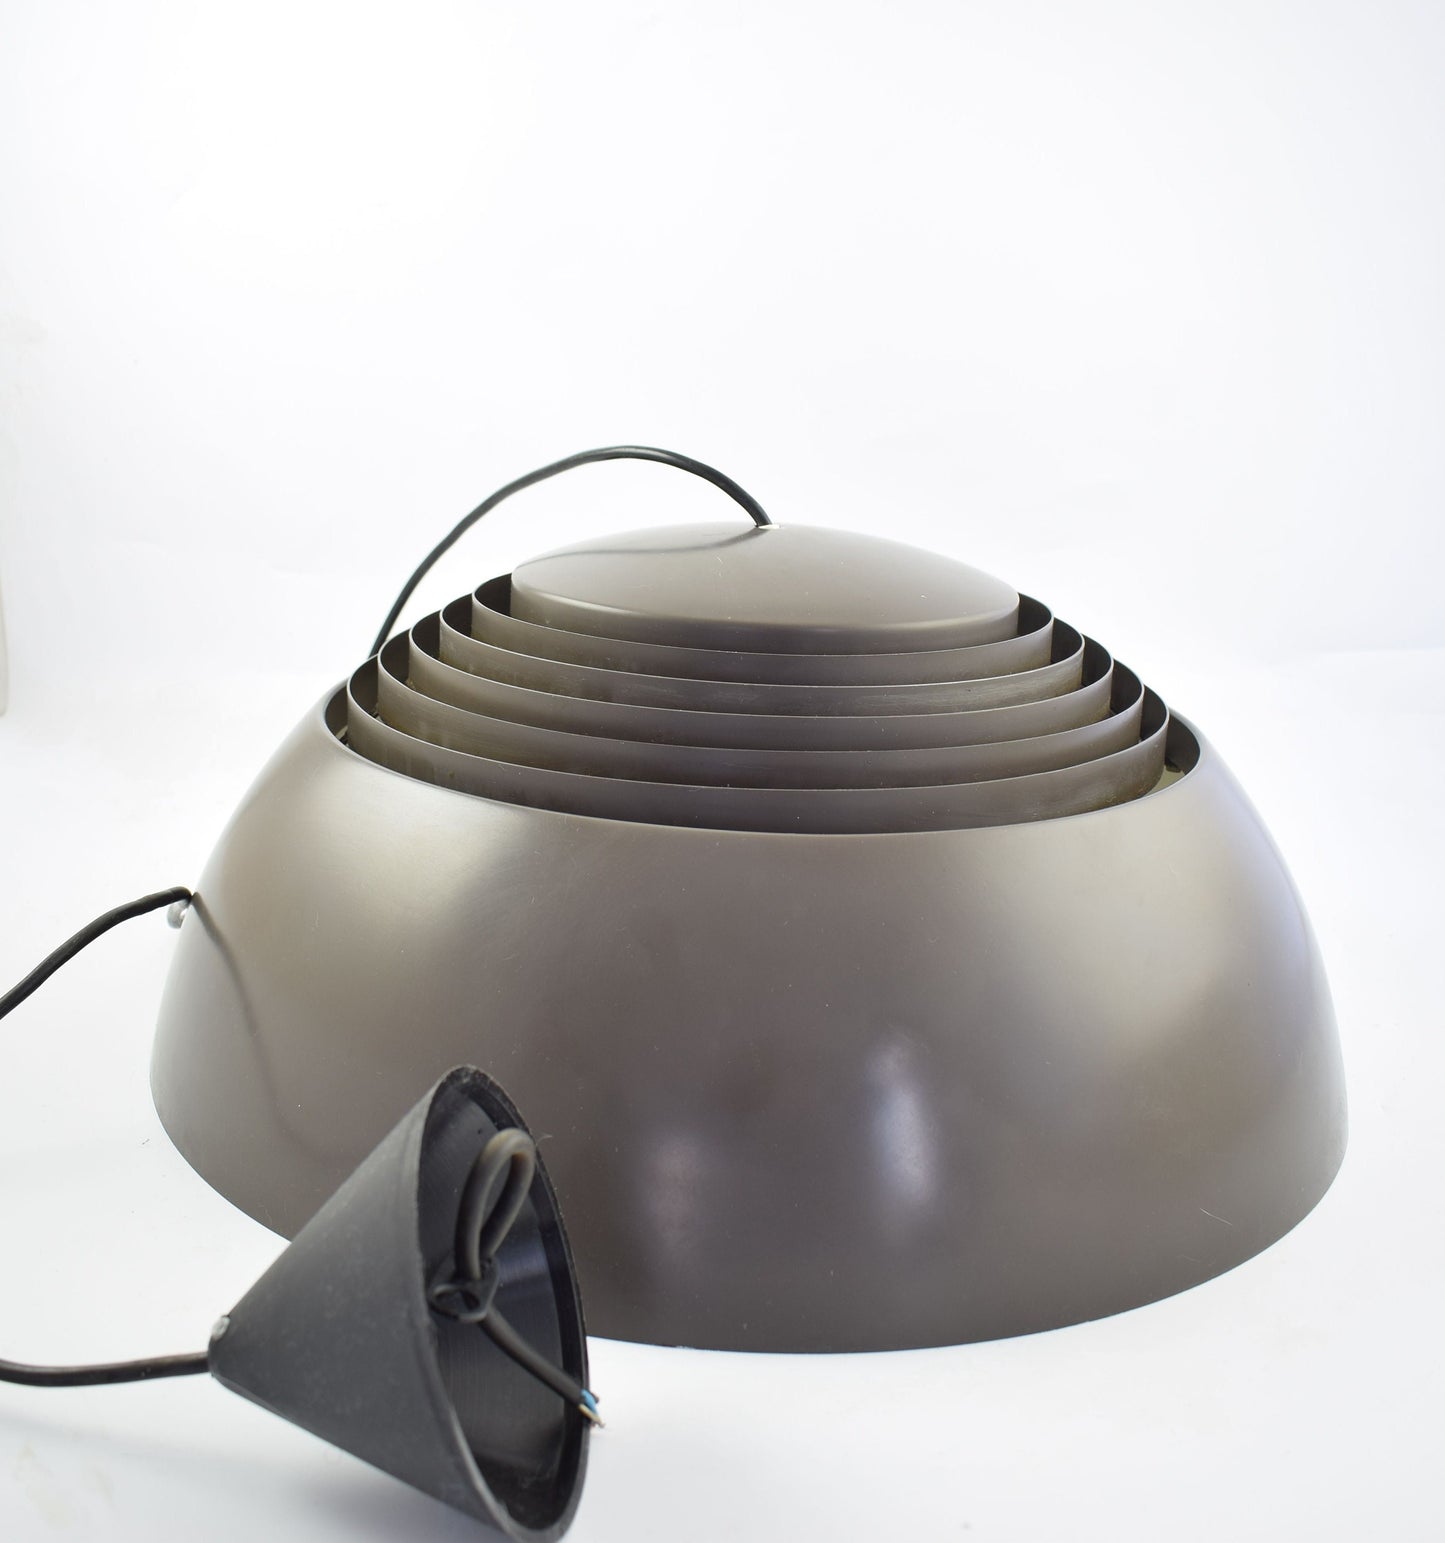 Lámpara de techo AJ Royal de Arne Jacobsen, para el fabricante escandinavo Louis Poulsen, conocida como AJ Royal Pendant marrón oscuro/antracita